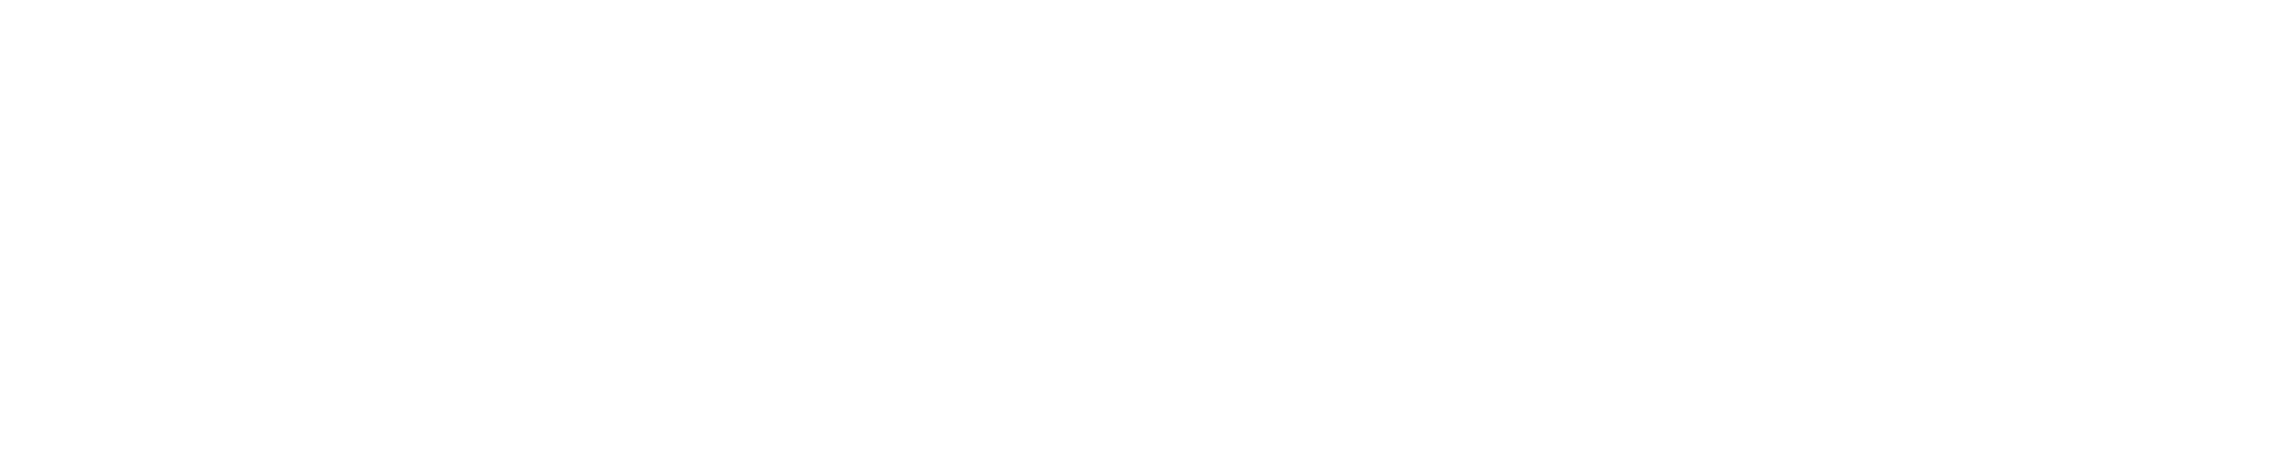 Paragon Analysis Corp